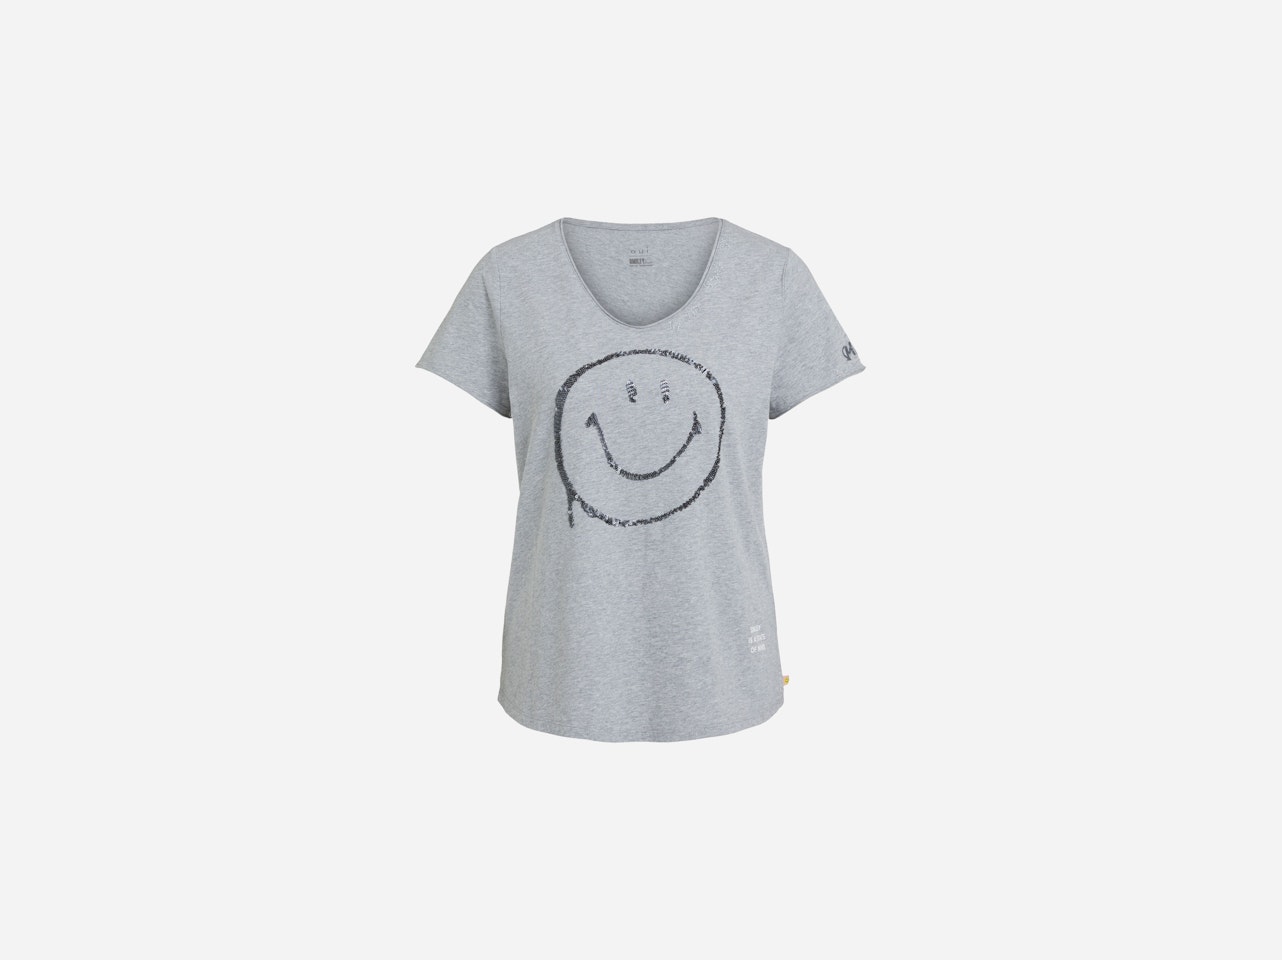 Bild 7 von T-shirt oui x Smiley® with sequins in grey | Oui